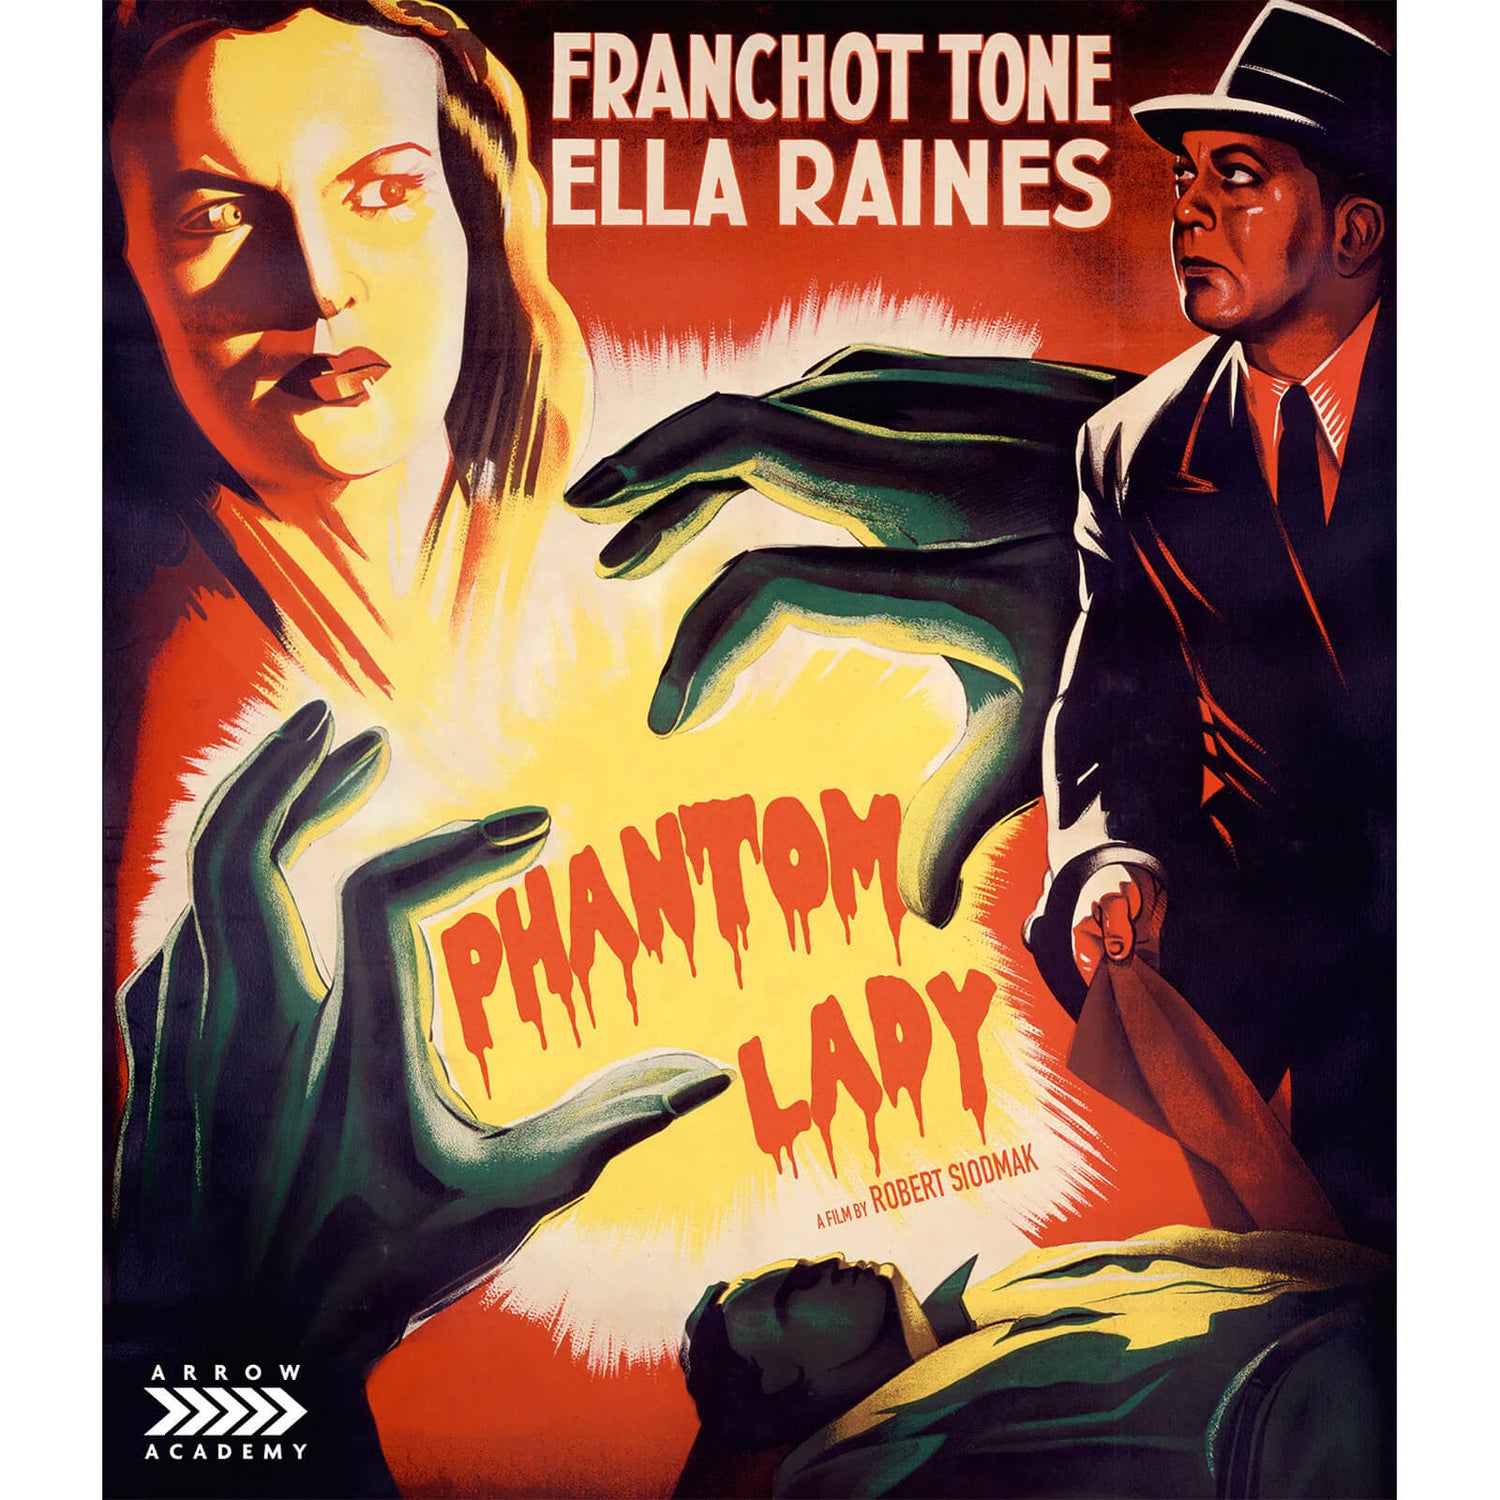 Phantom Lady Blu-ray